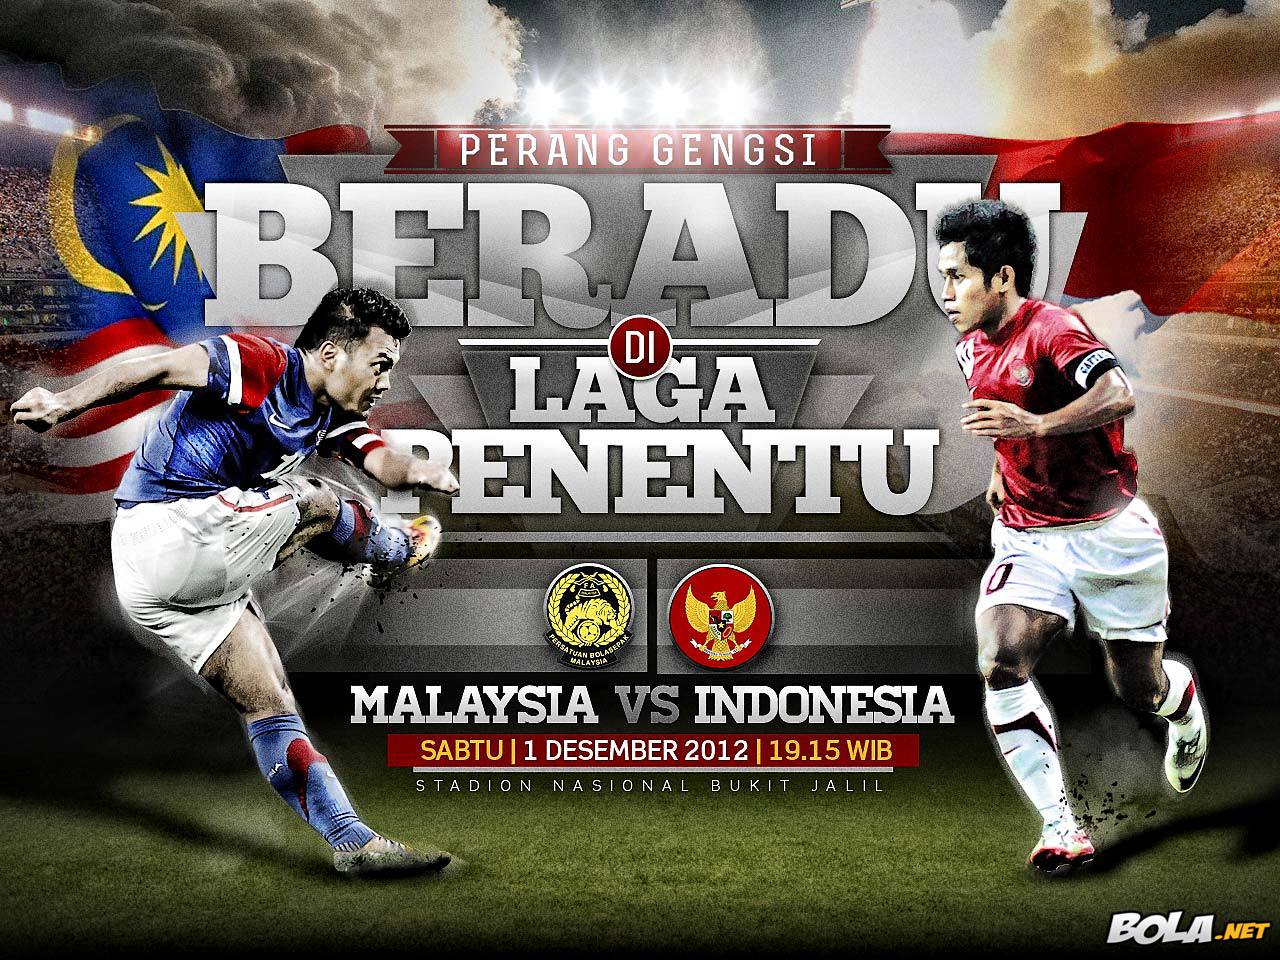  Malaysia vs Indonesia  AFF Suzuki Cup 2012 Koleksi Poster